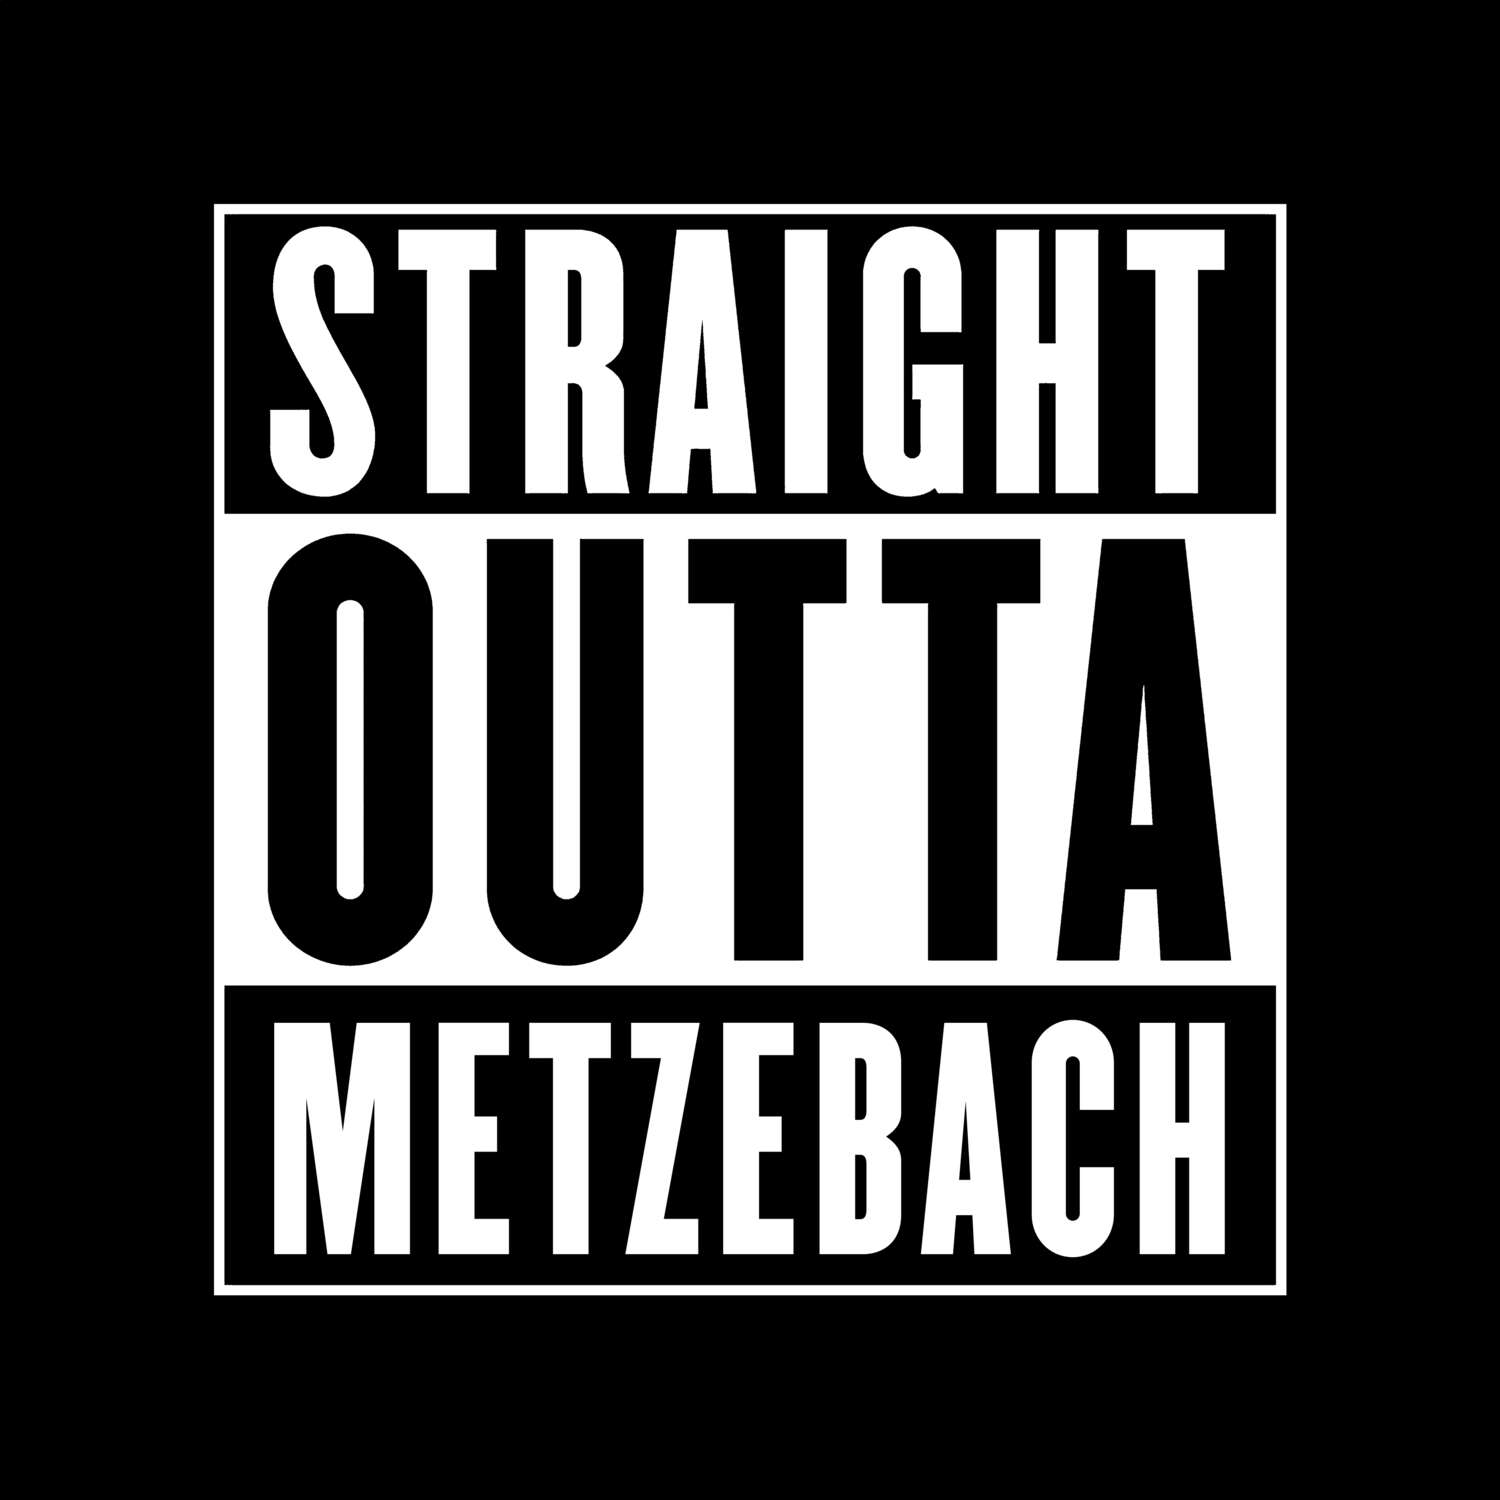 Metzebach T-Shirt »Straight Outta«